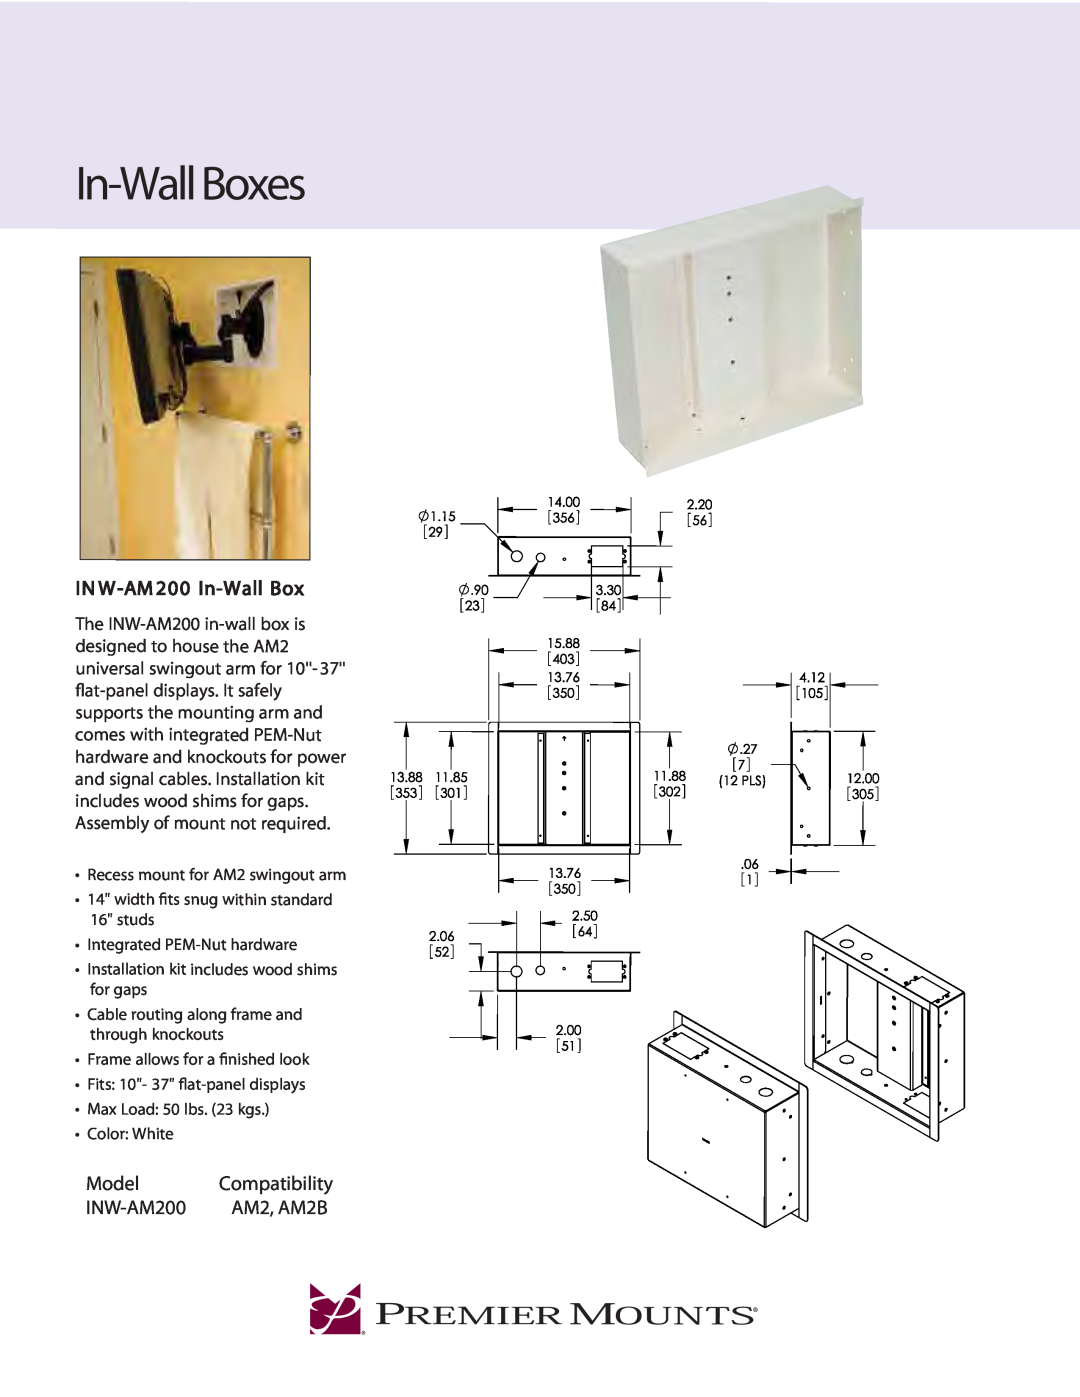 Premier Mounts INW-AM200 manual In-WallBoxes, IN W-AM200 In-WallBox, Model, AM2, AM2B, Compatibility 